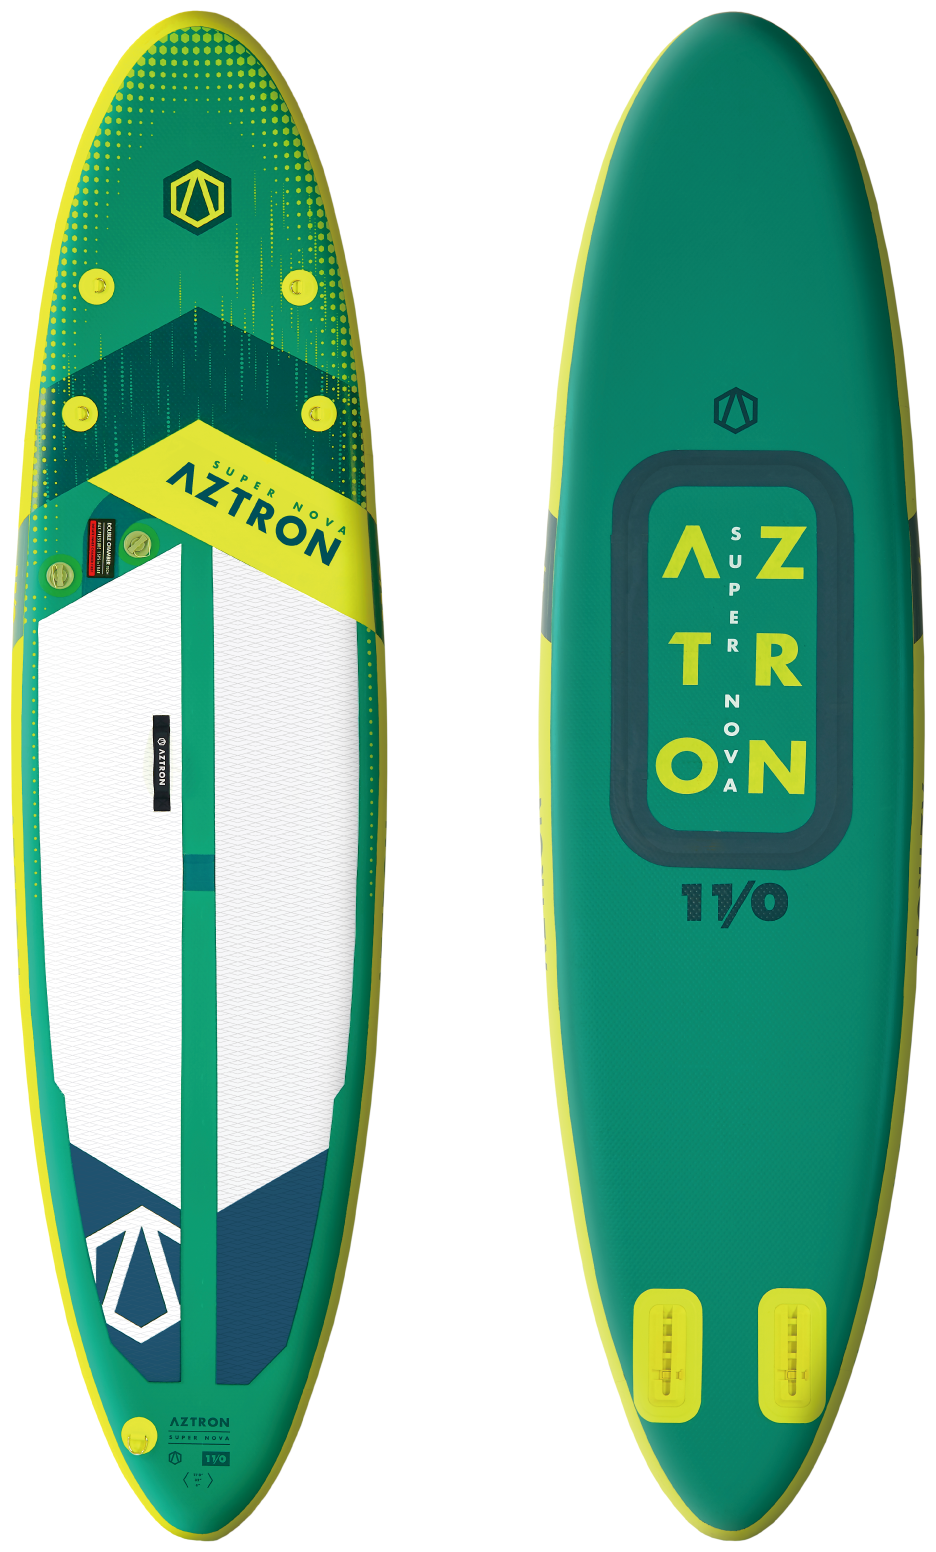 Сапборд AZTRON Super Nova Compact, надувной, 335 х 81 х 15 см, зеленый [as-013]